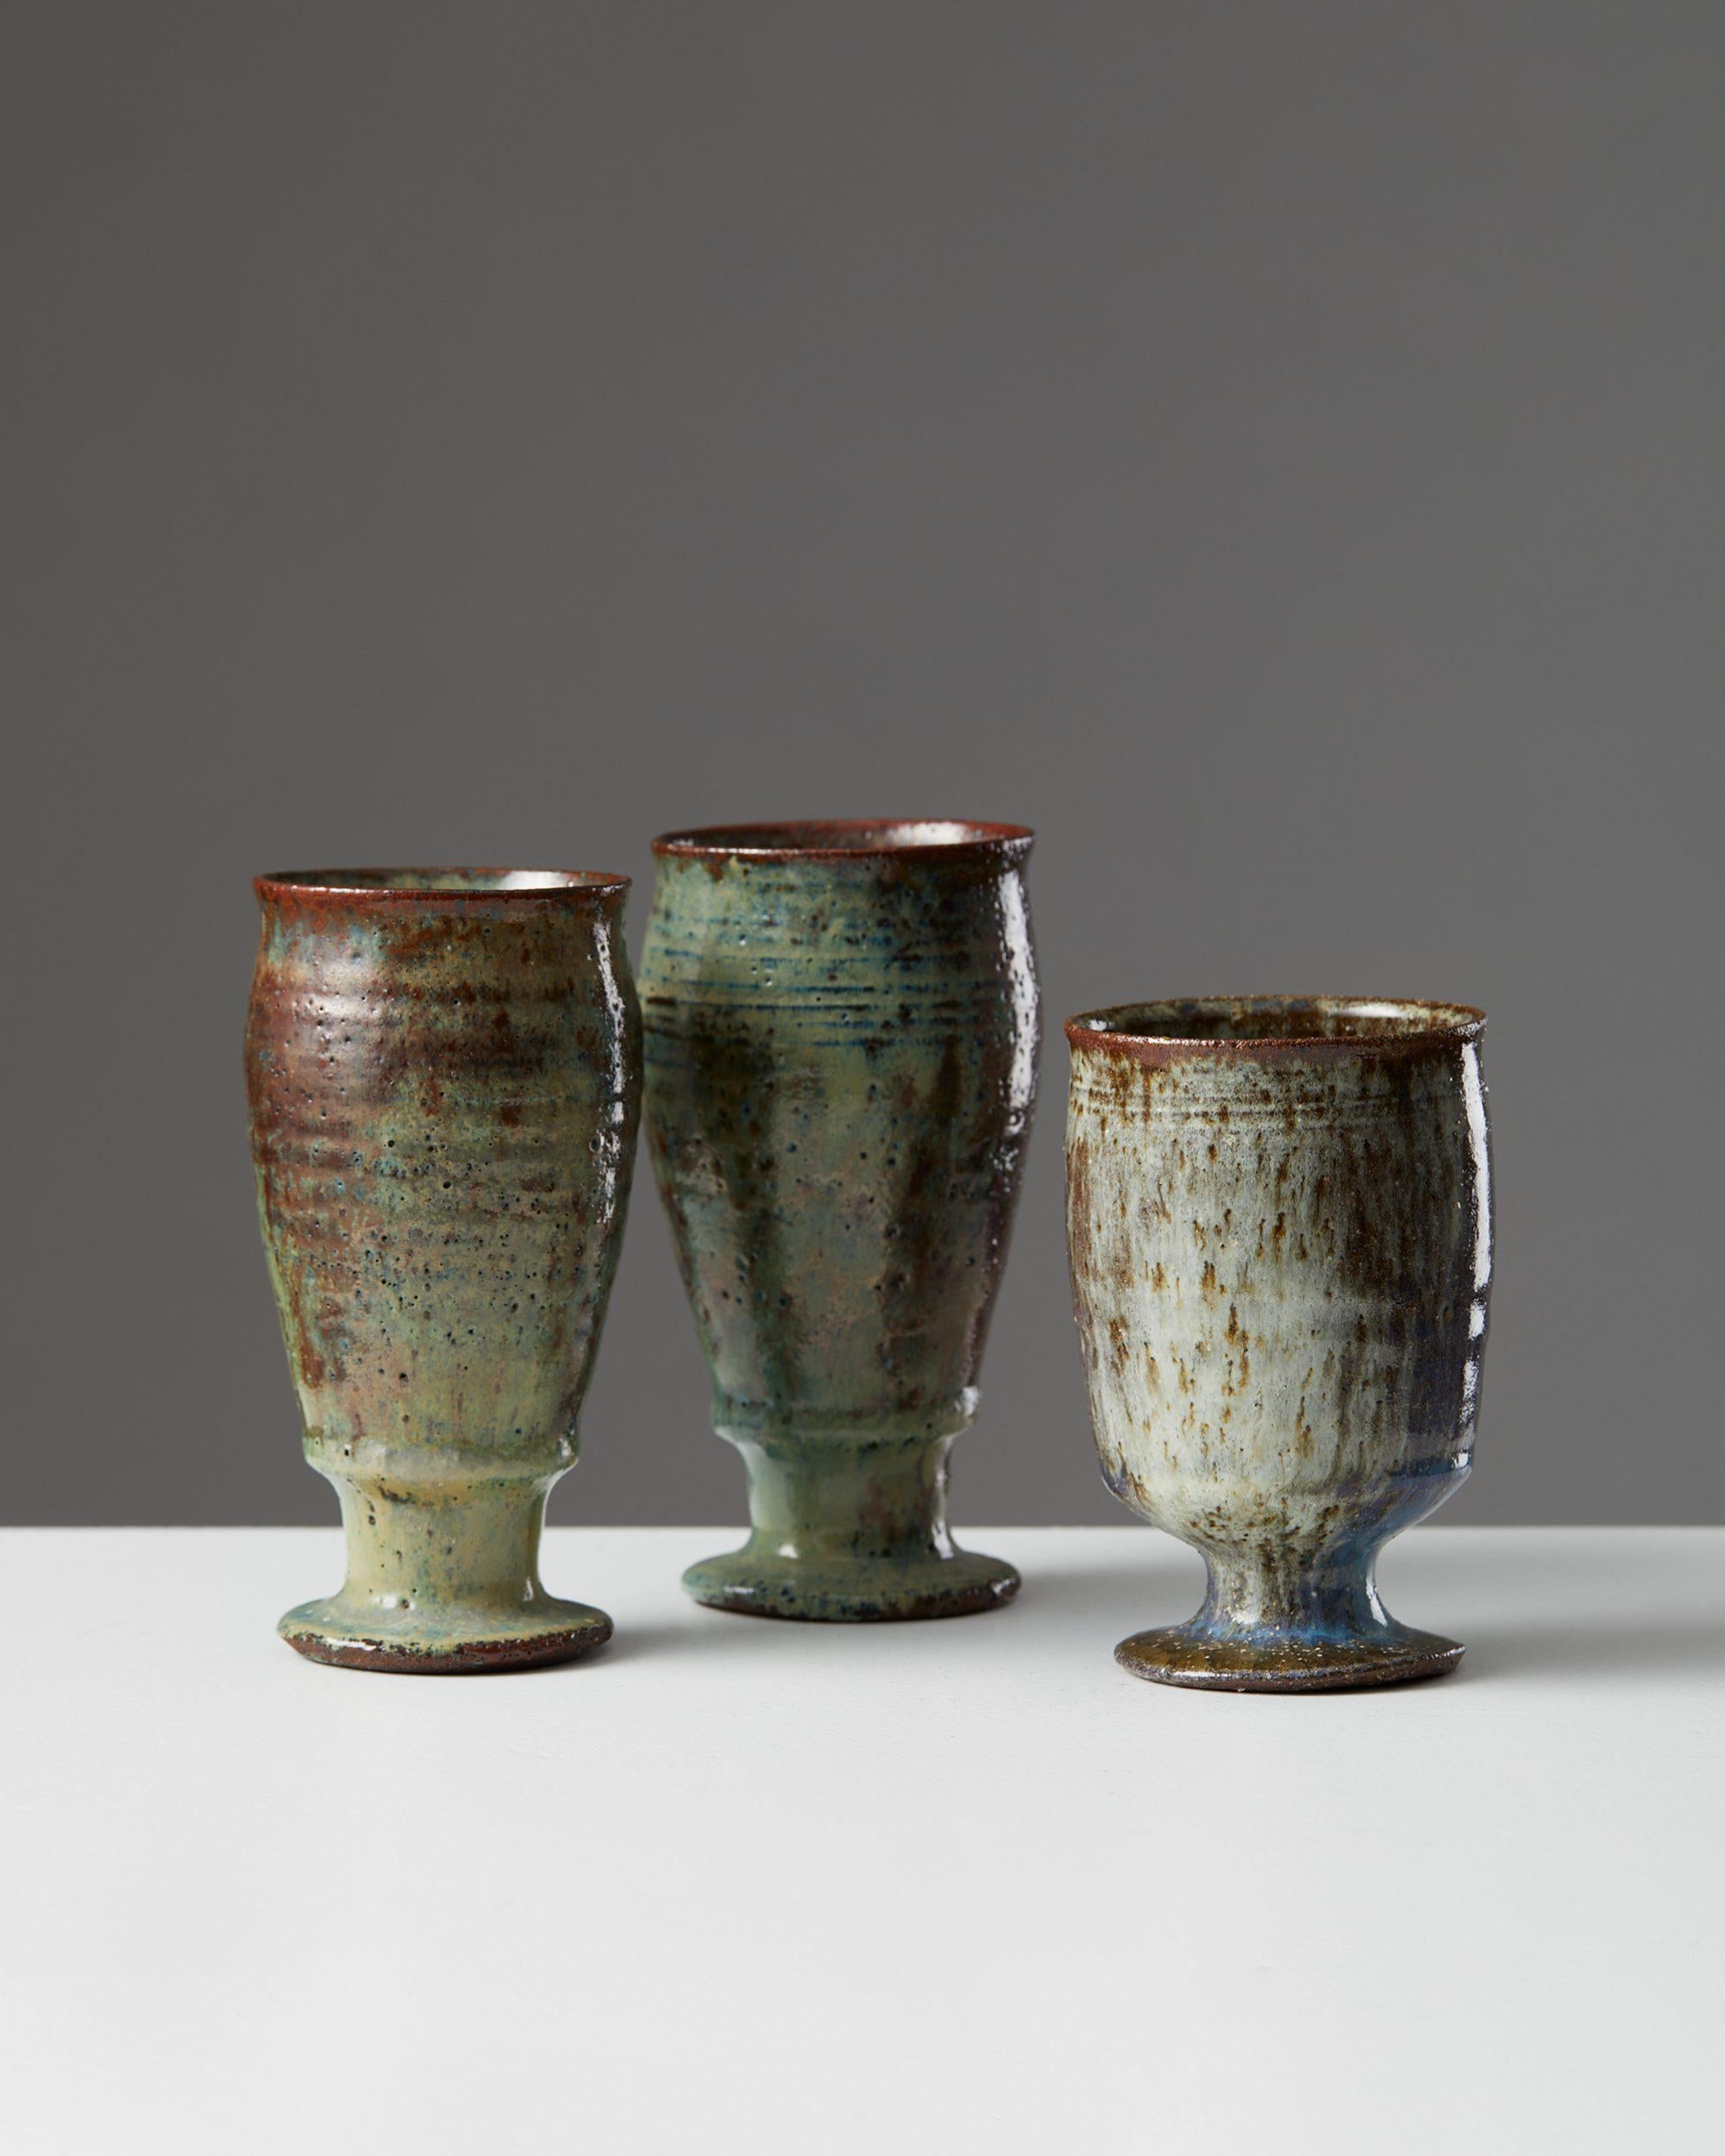 Glazed stoneware.

H: 10-12.3 cm/ 4-5